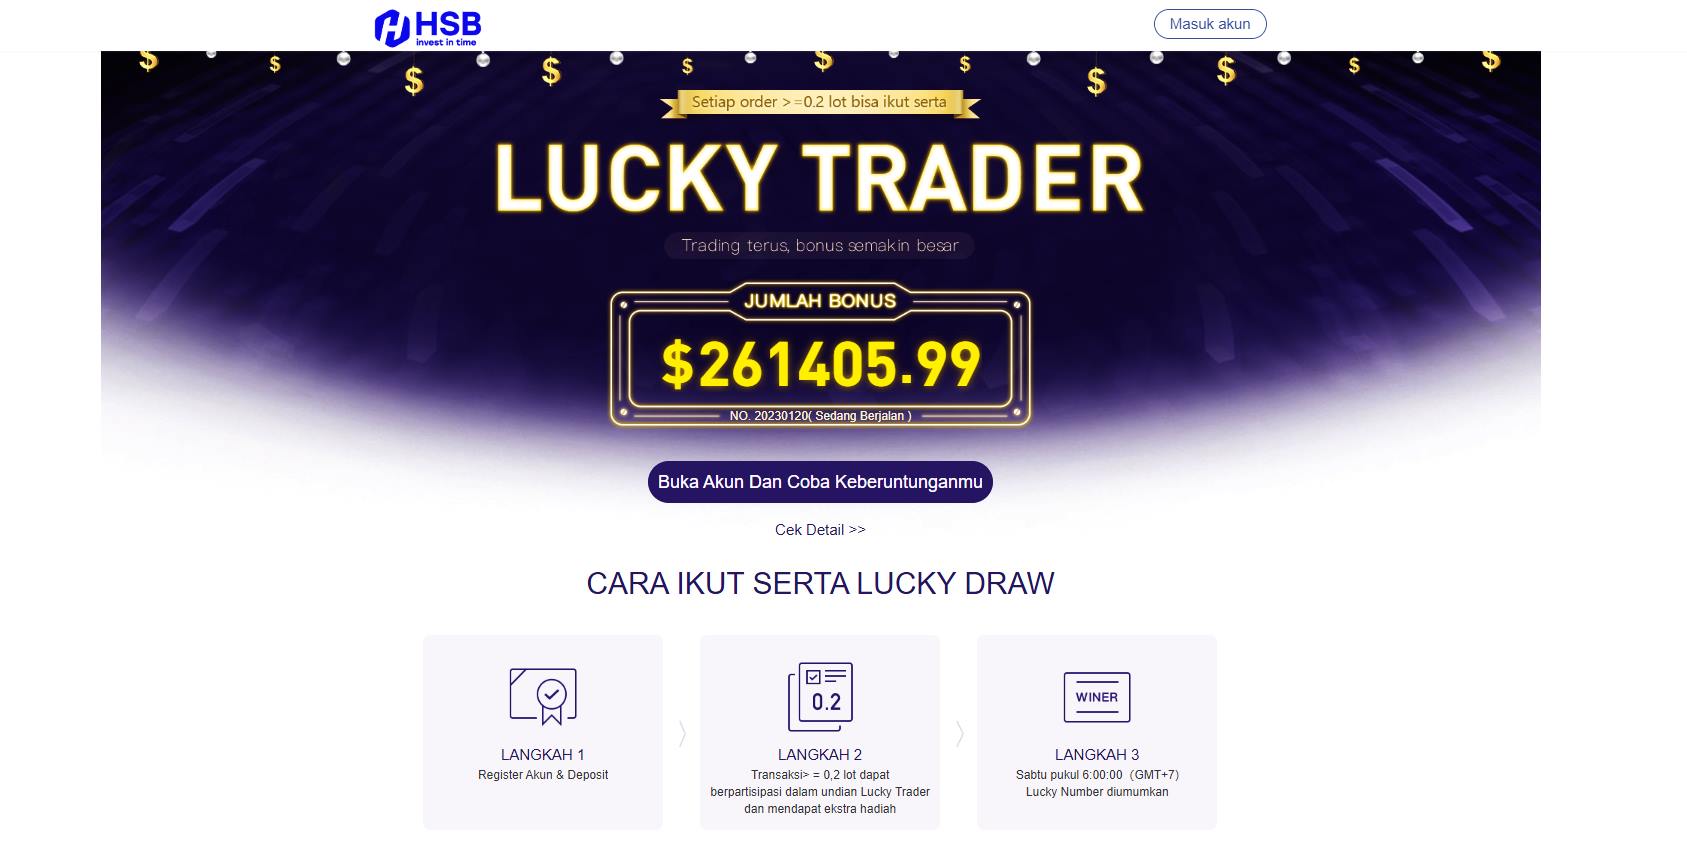 lucky trader hsb